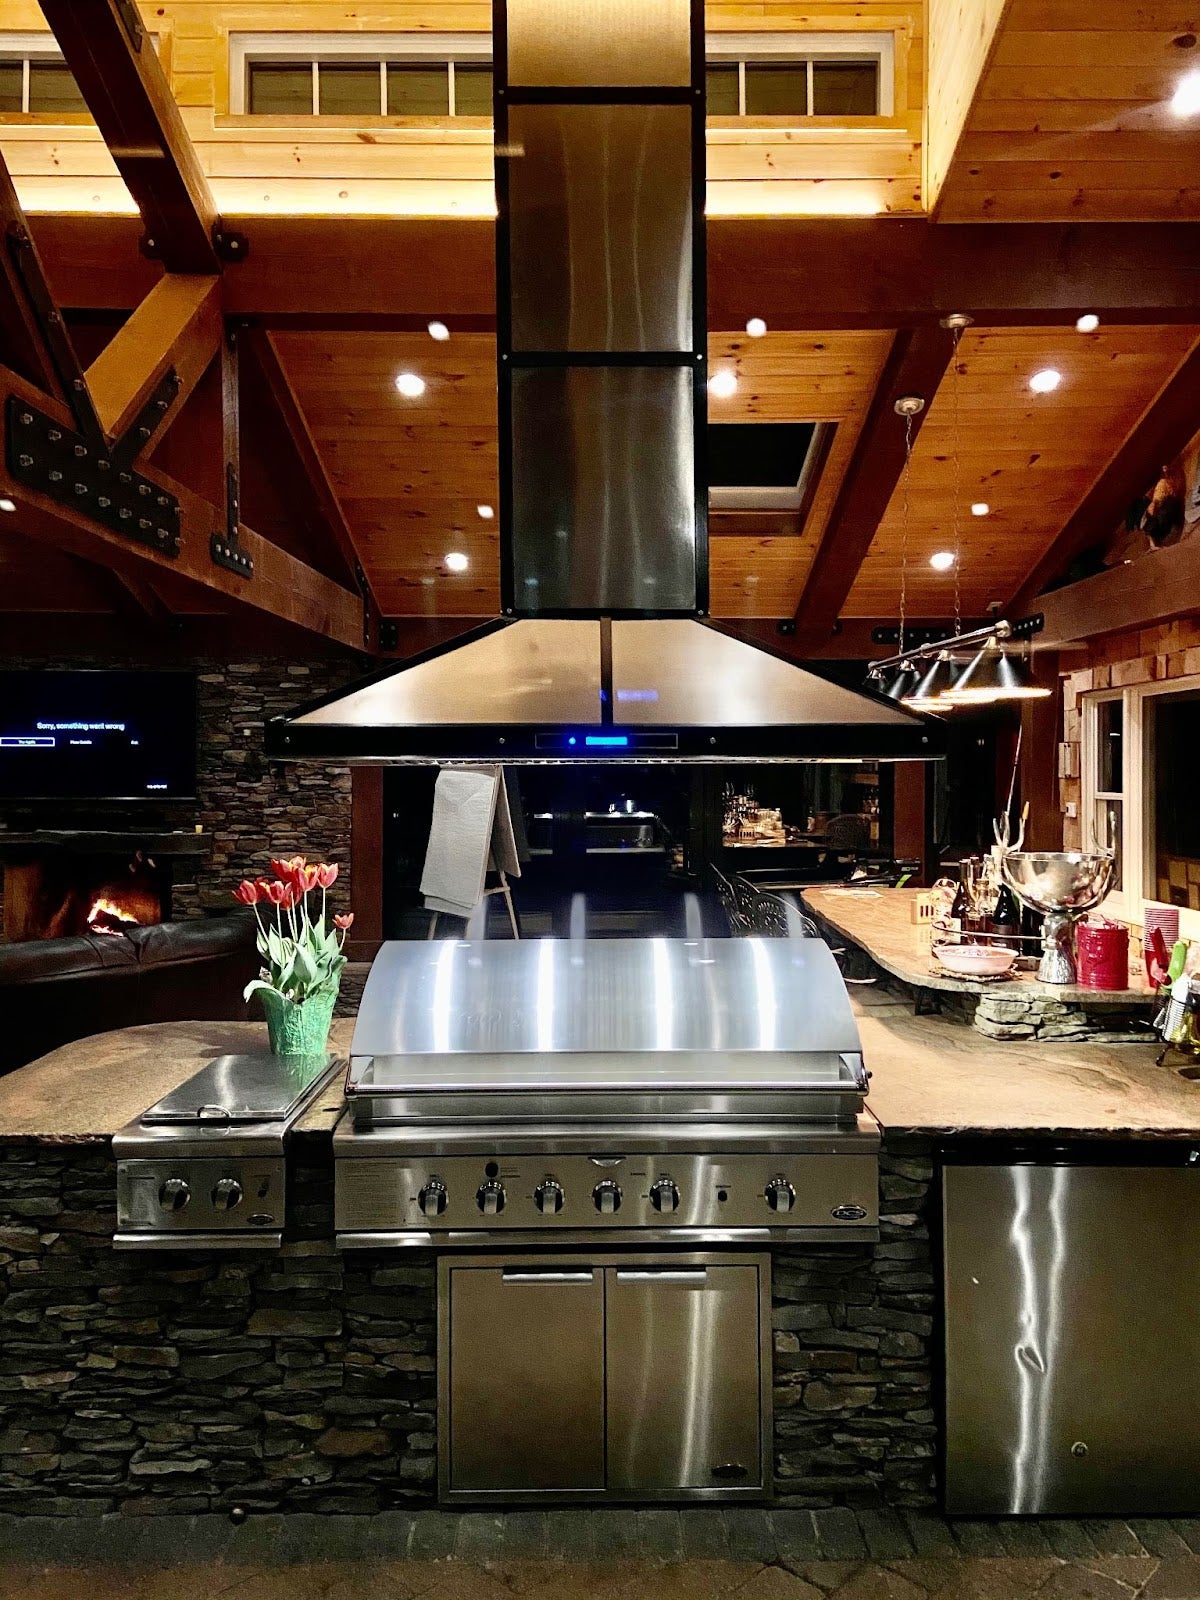 Proline range hood in a rustic stone outdoor kitchen with warm lighting and wooden accents - prolinerangehoods.com